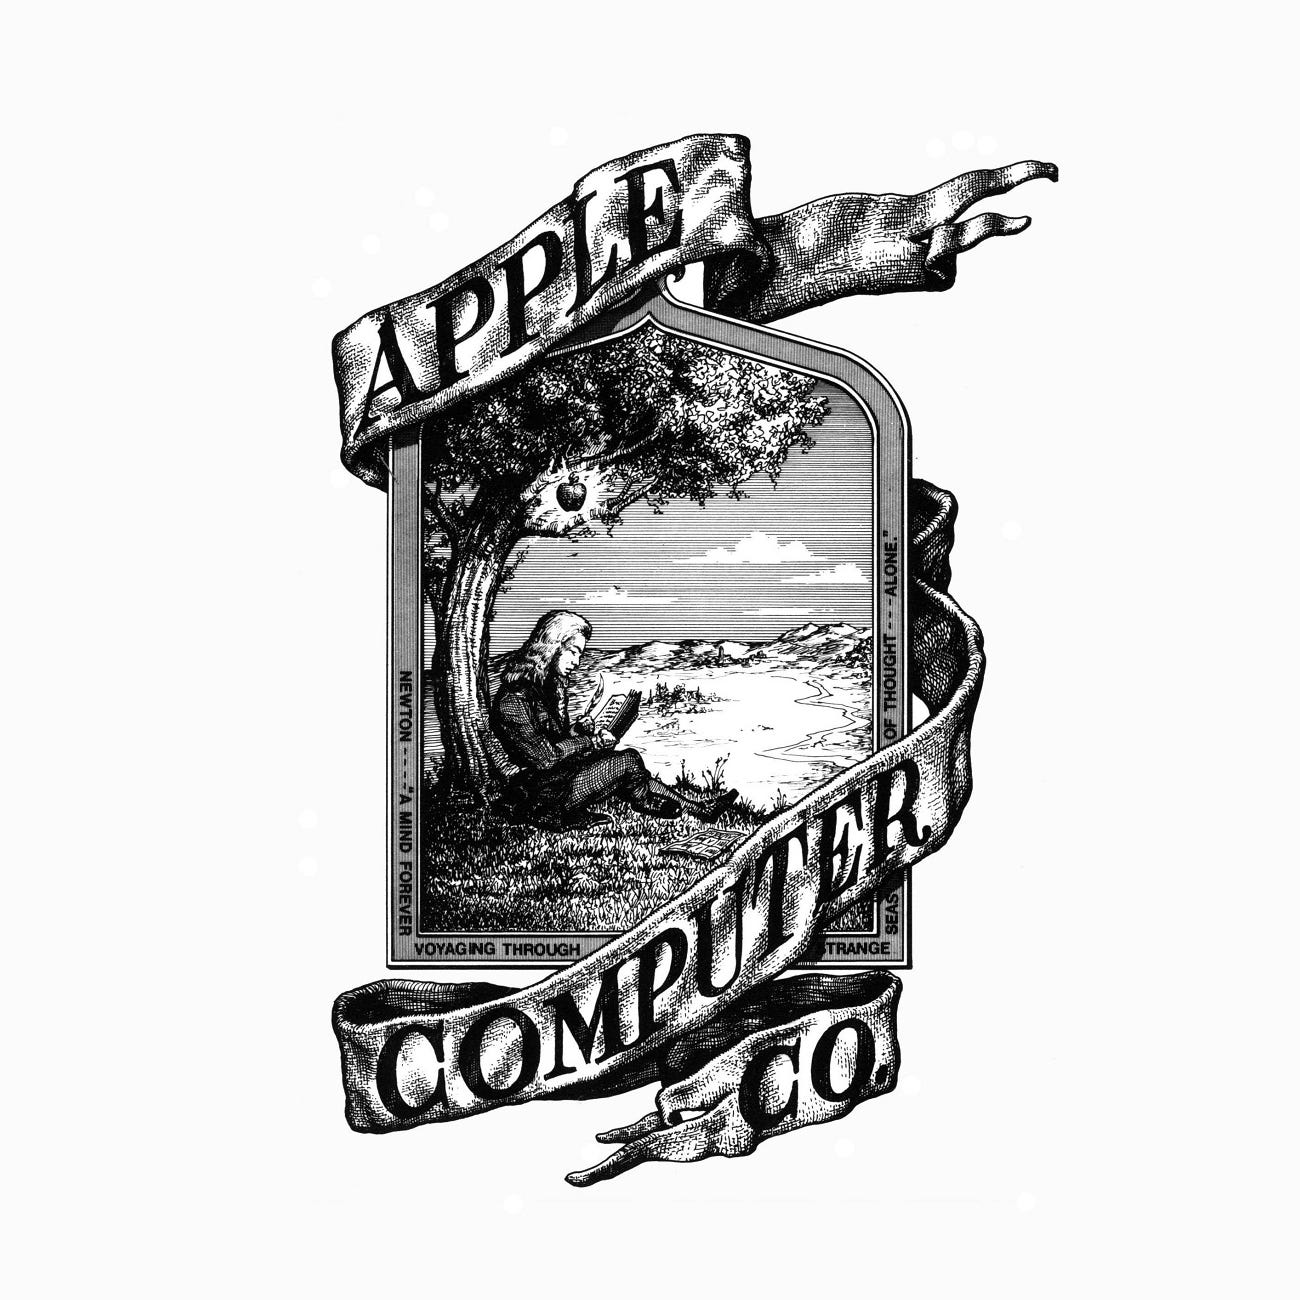 Original Apple Computers logo by Ron Wayne